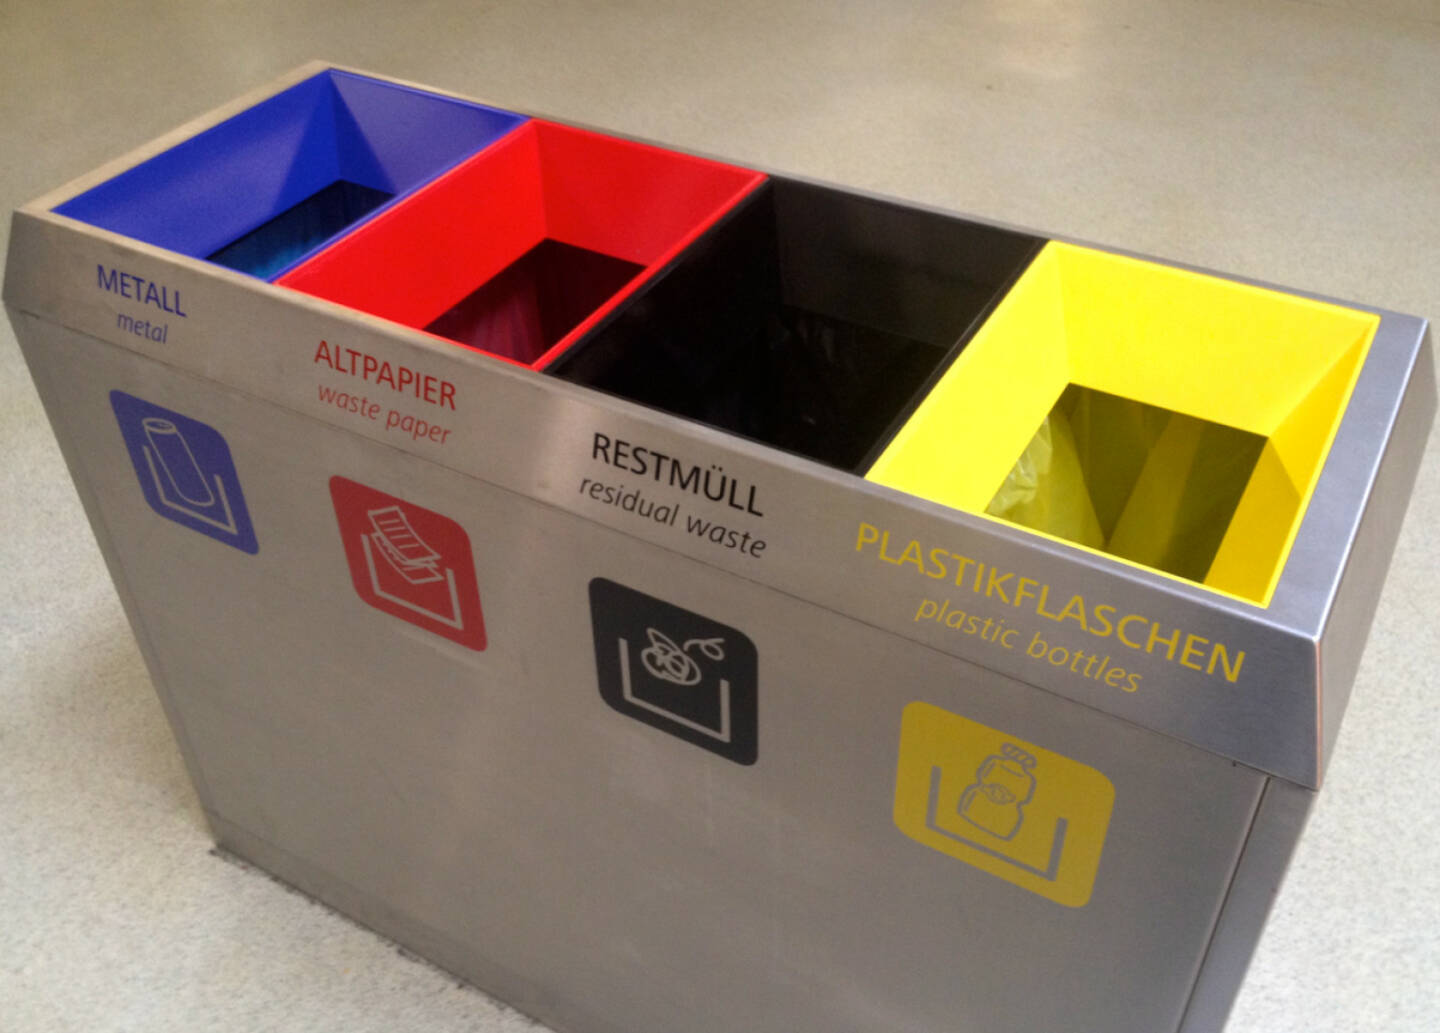 Müll: Metall, Altpapier, Restmüll, Plastikflaschen